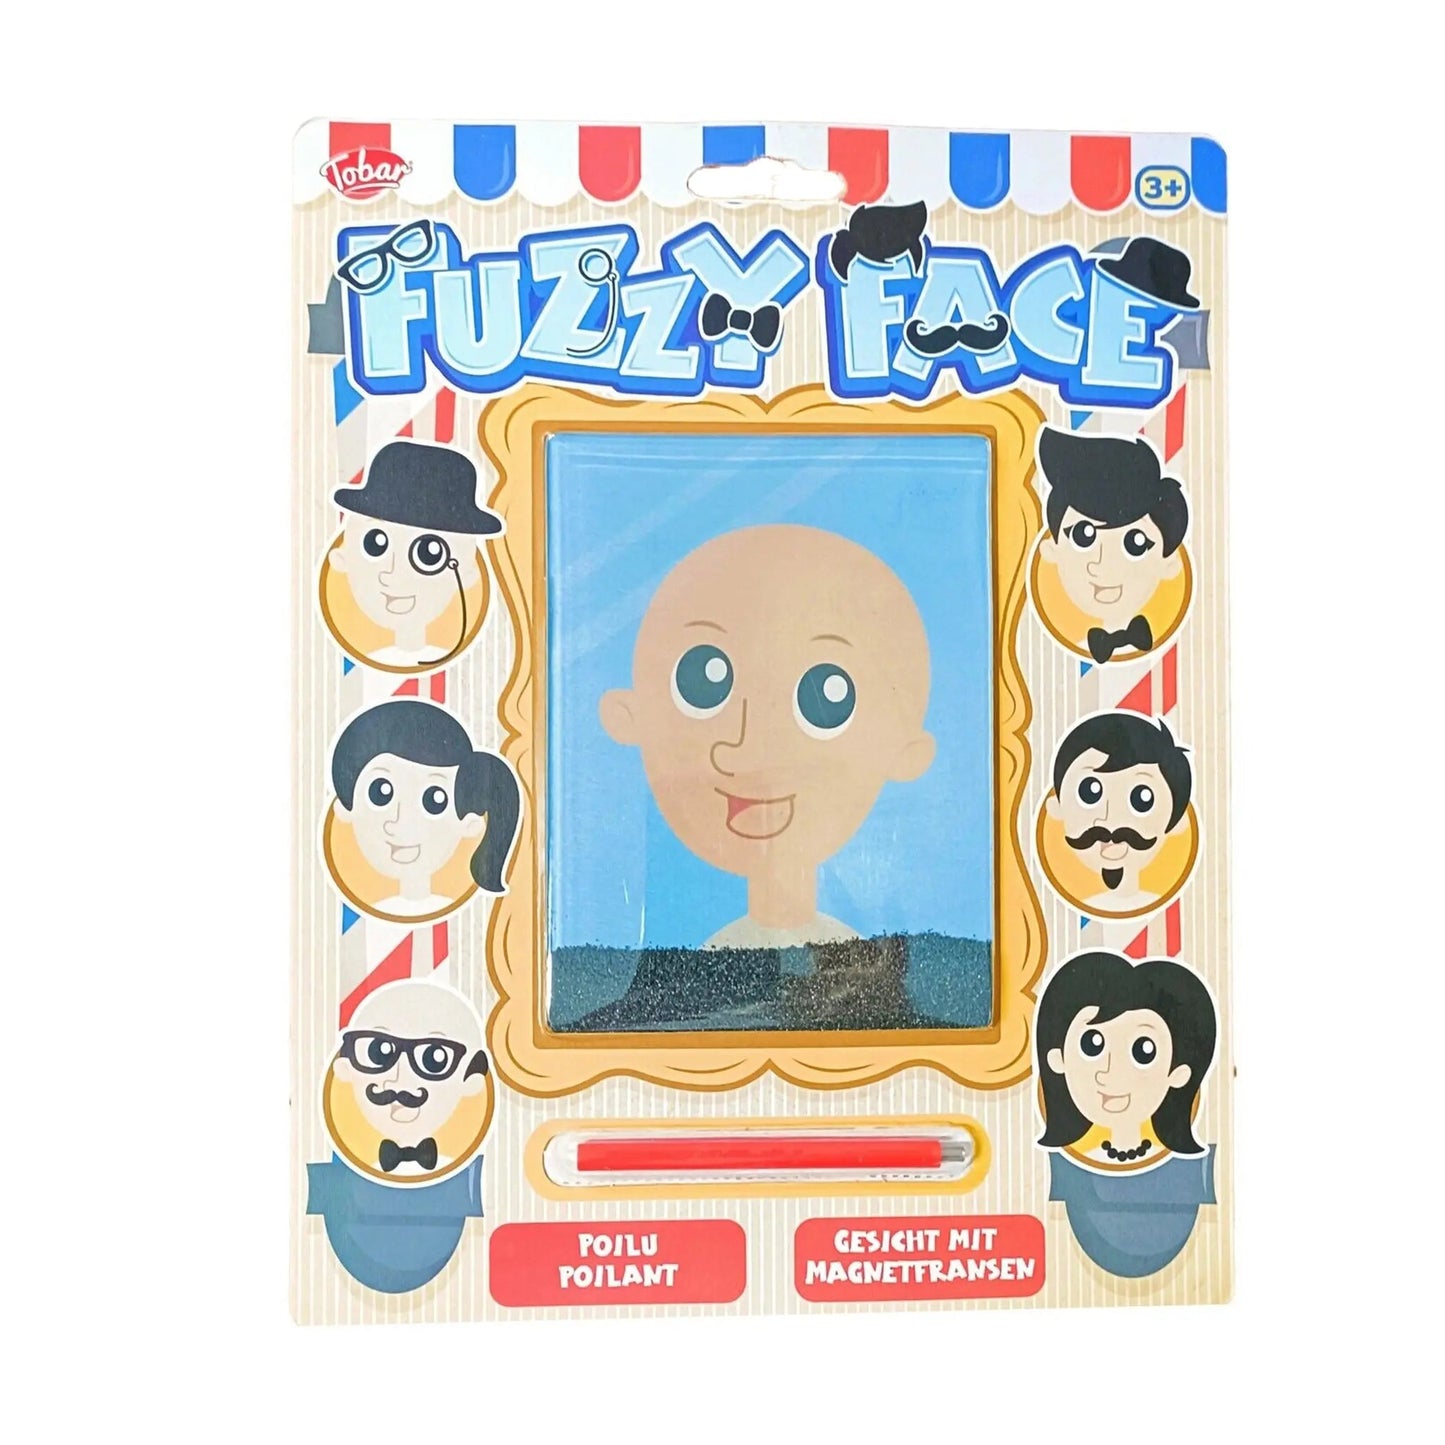 Fuzzy Face - Tobar - The Forgotten Toy Shop